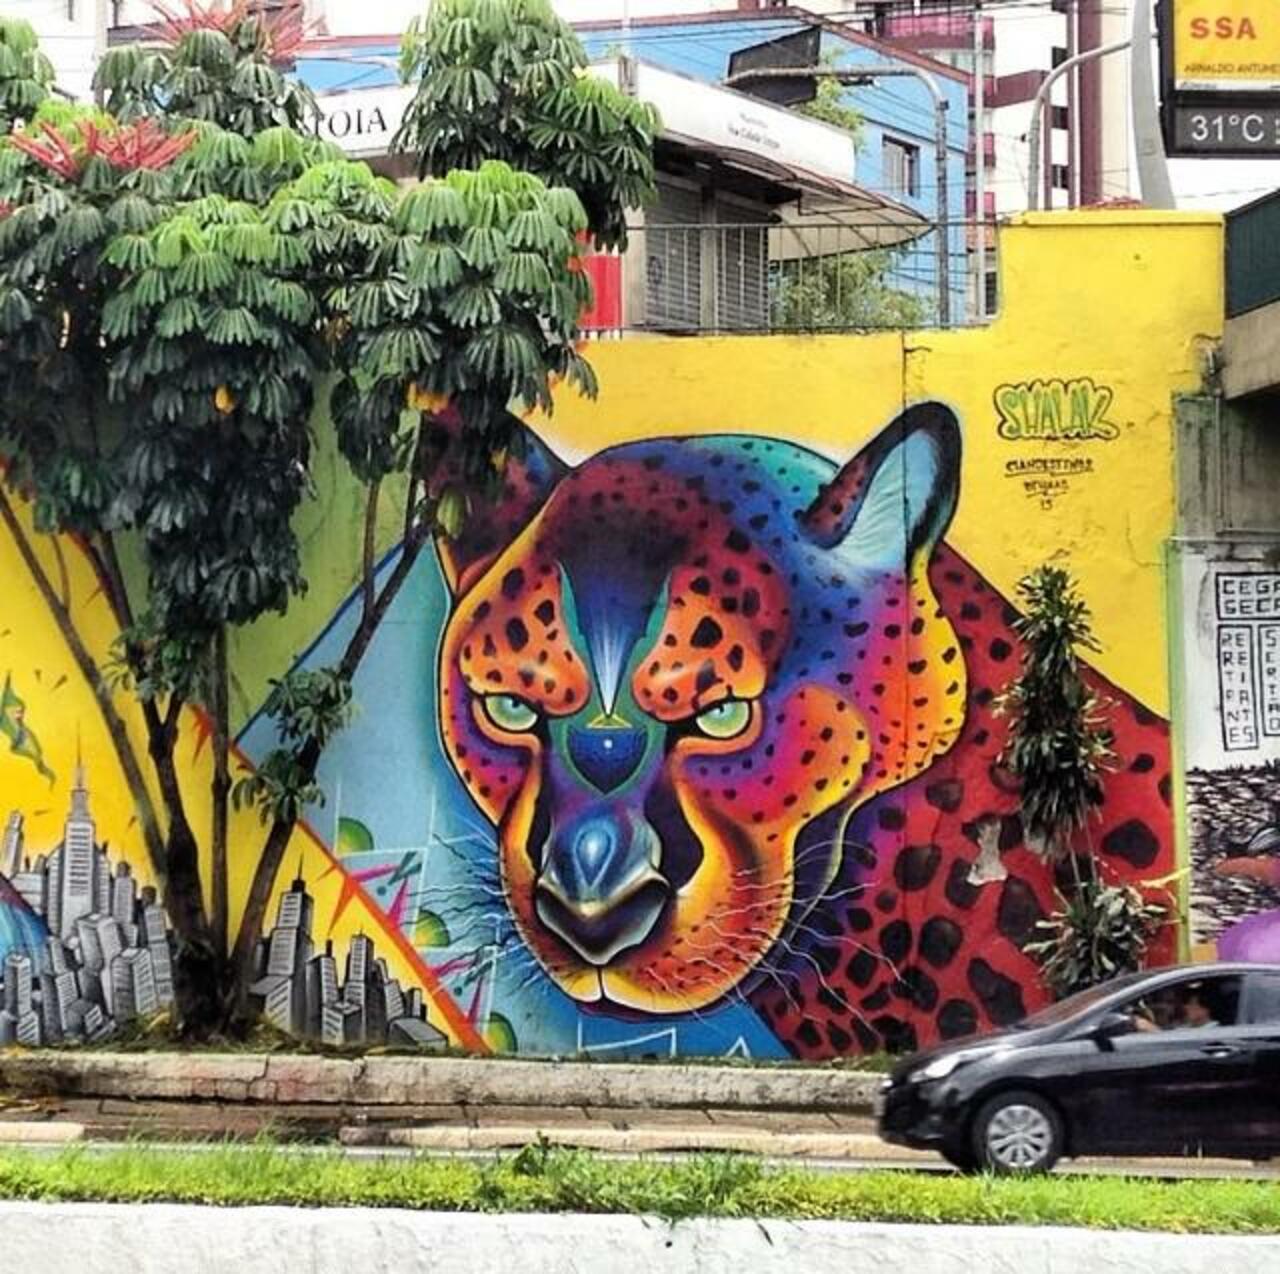 Artist ShalakAttack beautiful & colourful nature in Street Art piece in São Paulo 

#art #graffiti #mural #streetart http://t.co/wzWUPLimAj